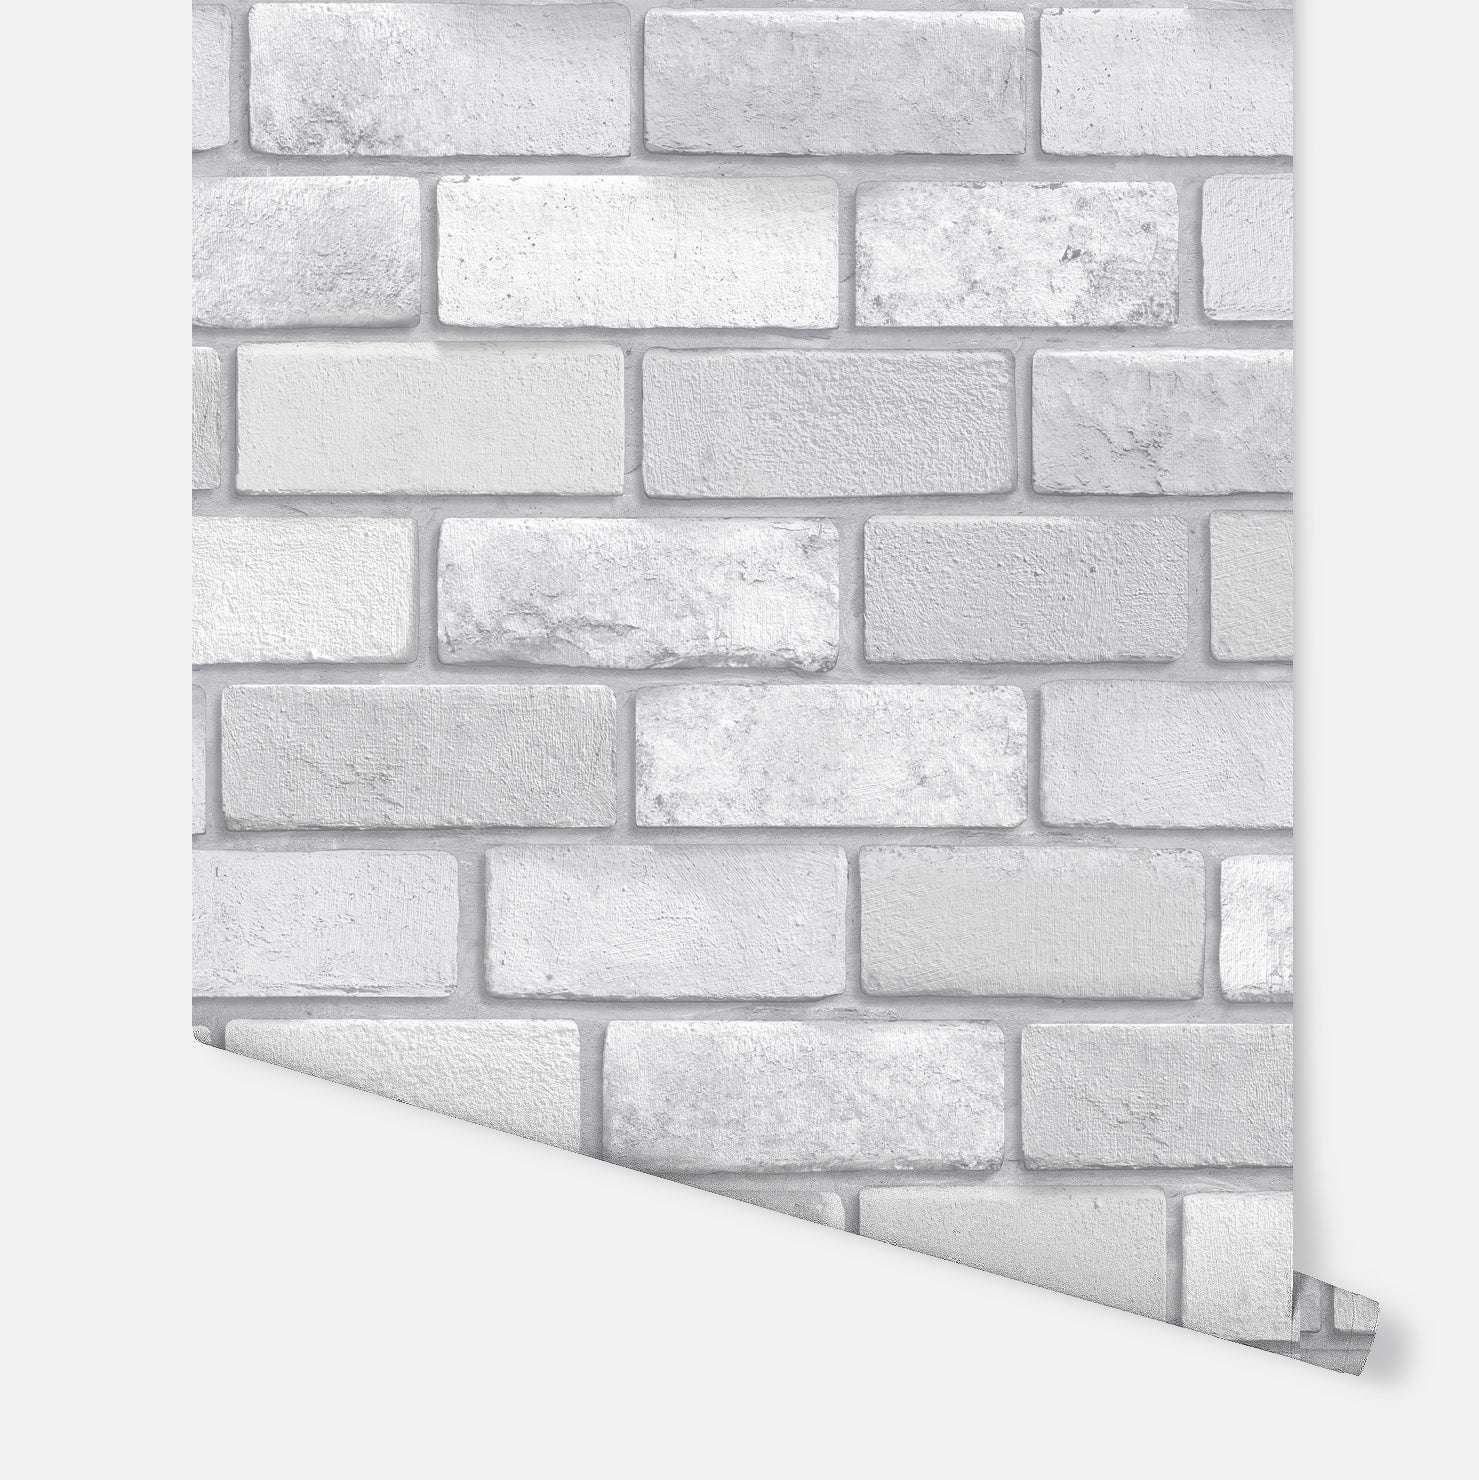 Diamond Silver Brick Wallpaper